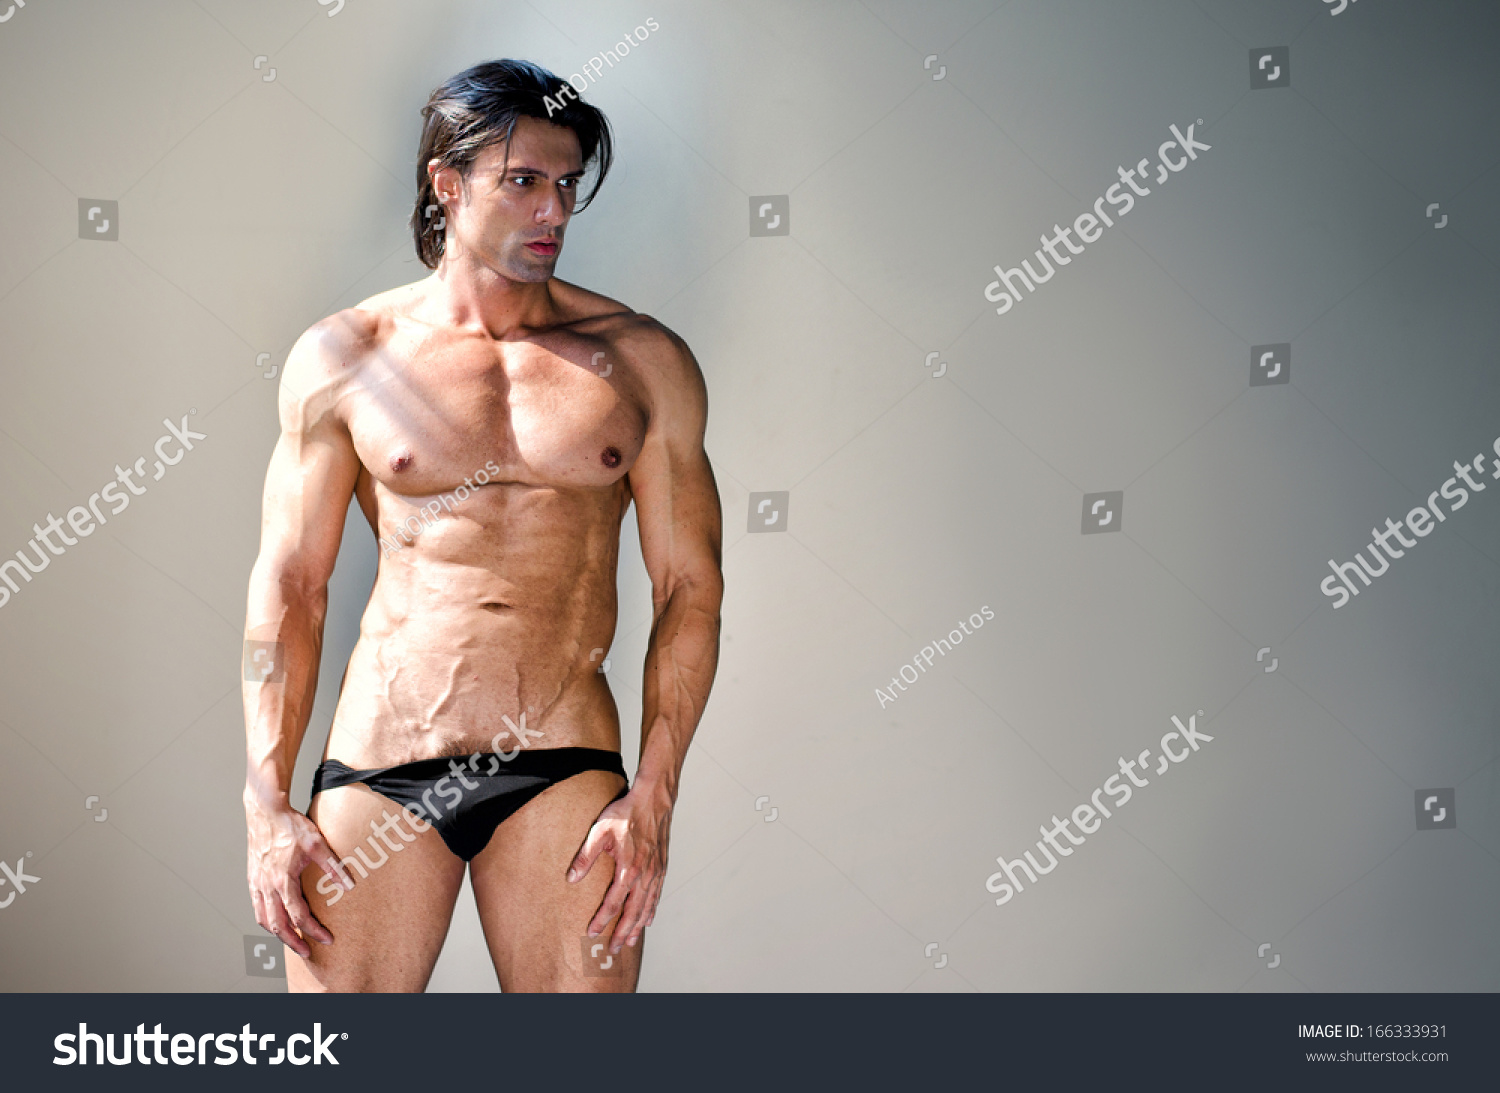 Muscular Male Bodybuilder Nearly Naked Underwear: foto stock (editar agora)...